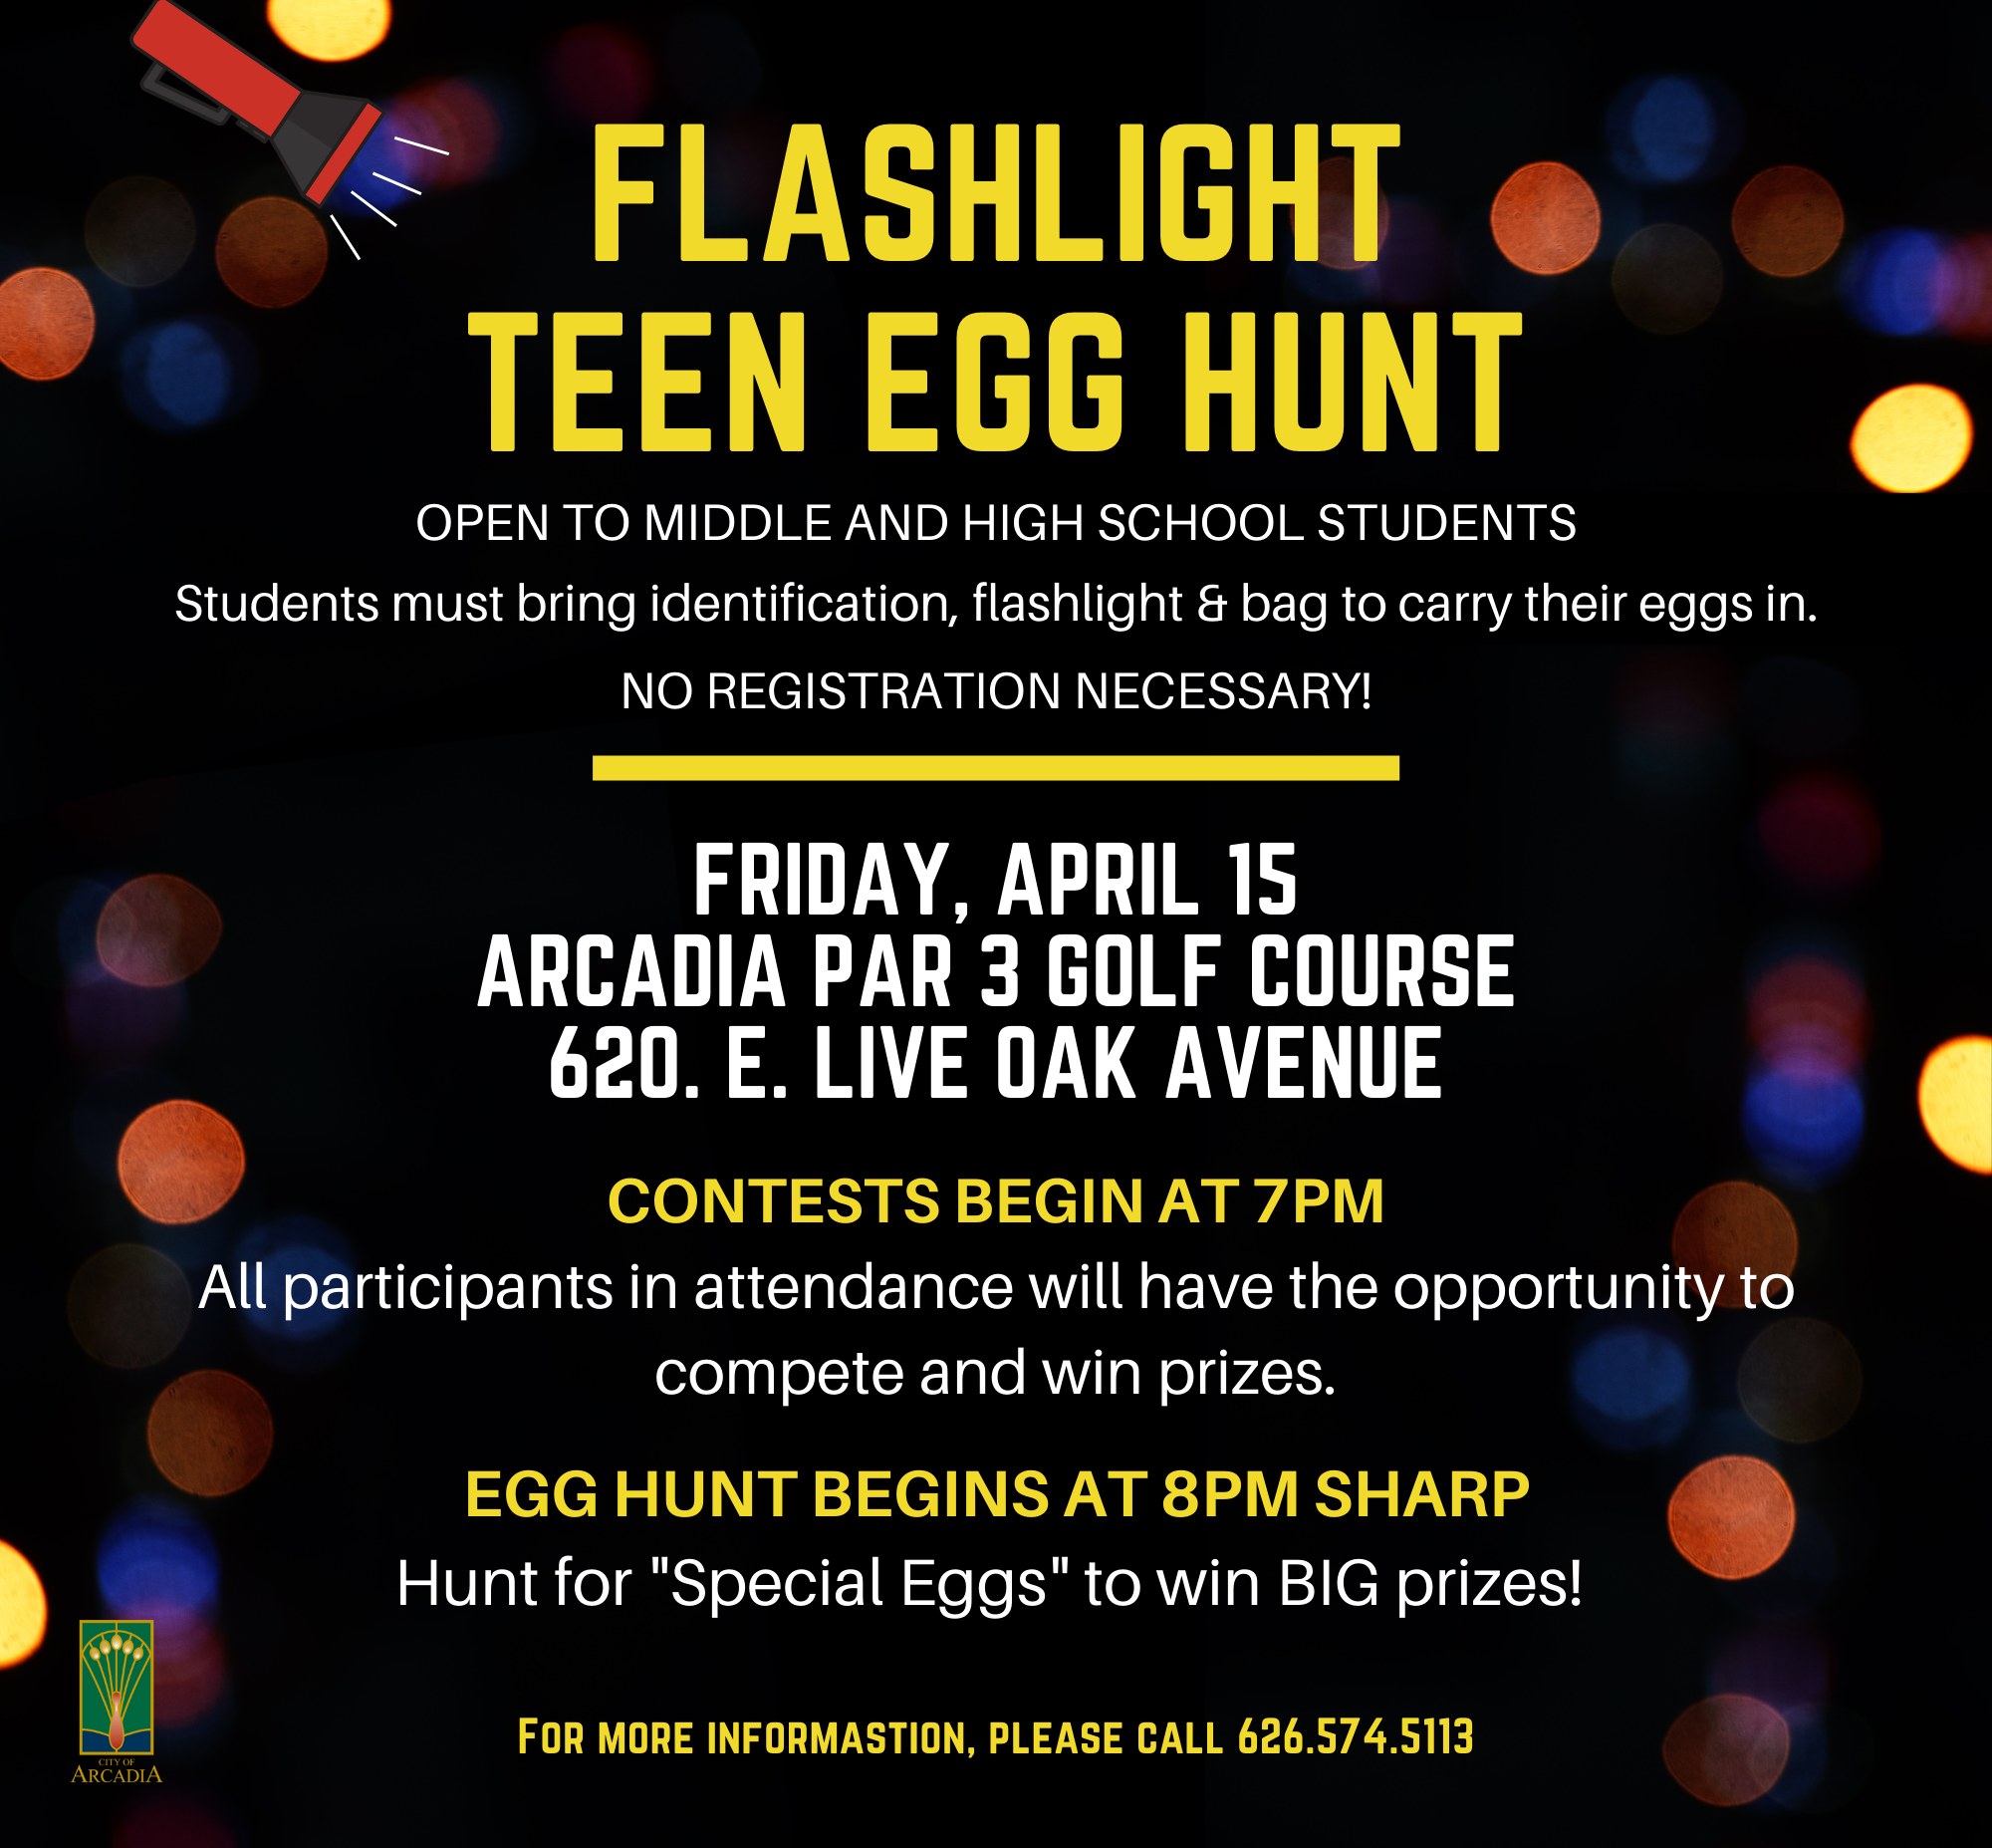 City of Arcadia Flashtlight Teen Egg Hunt flyer 